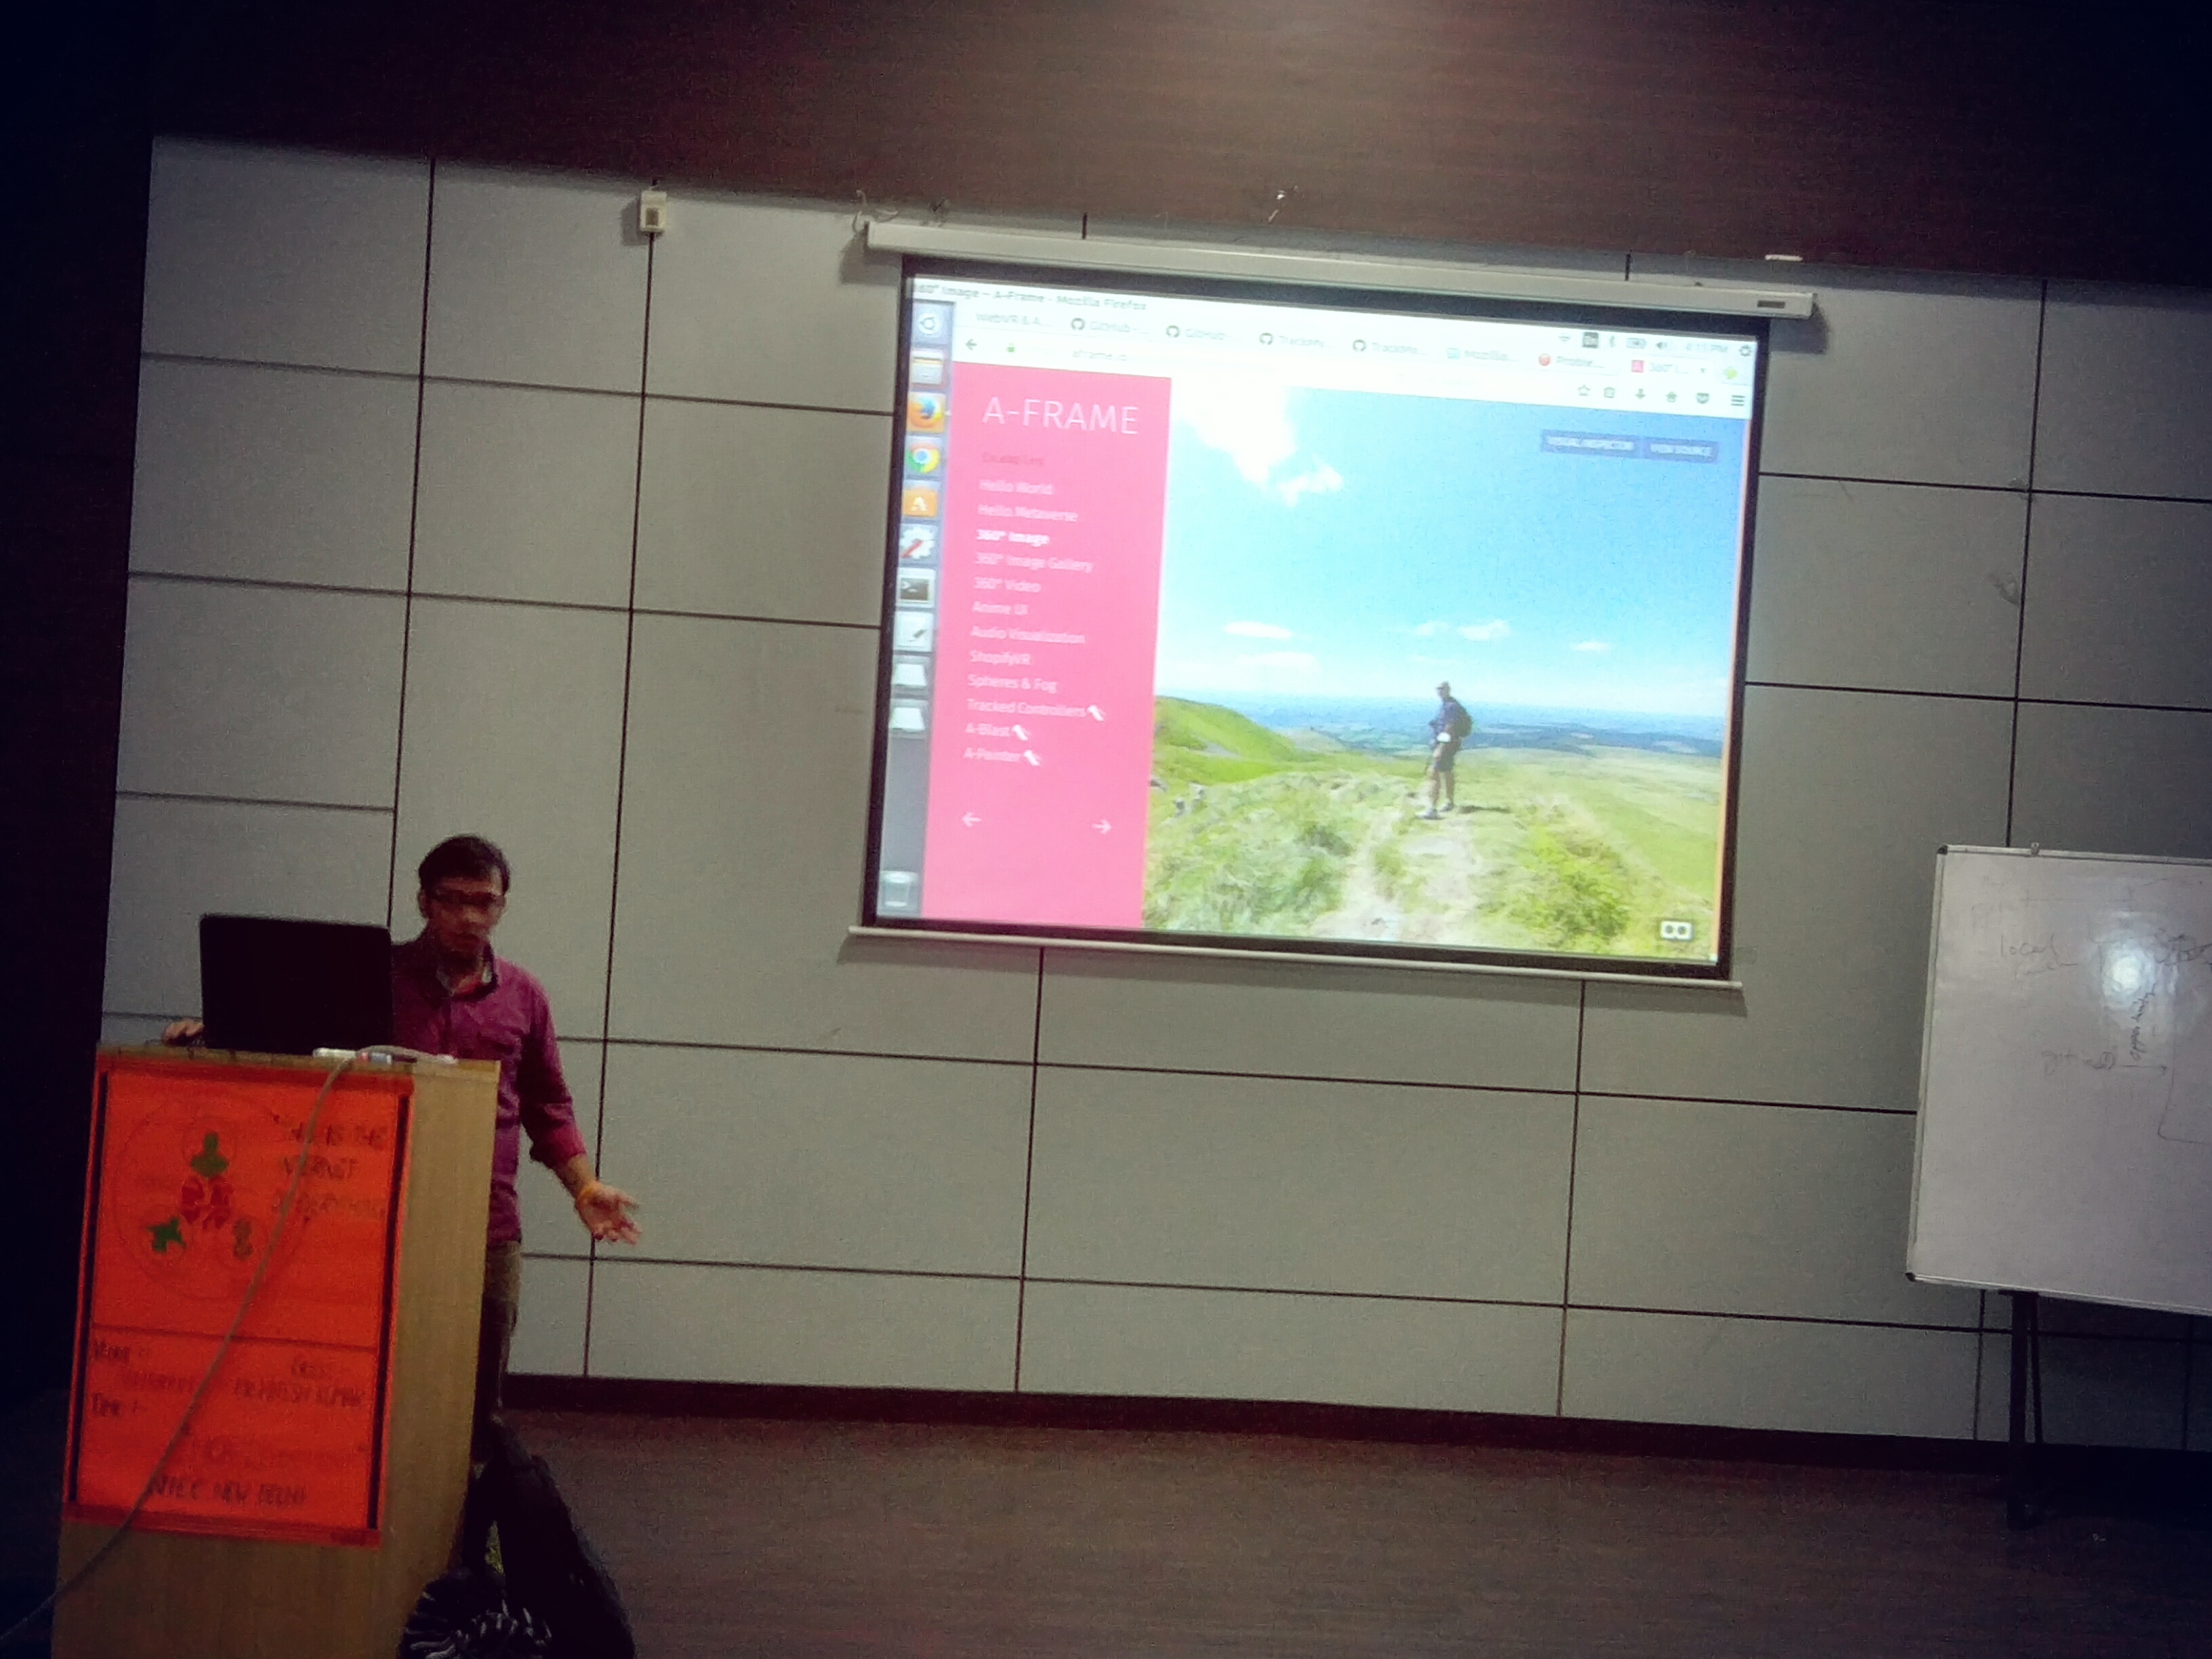 Sanyam's talk on WebVR and A-Frame JS